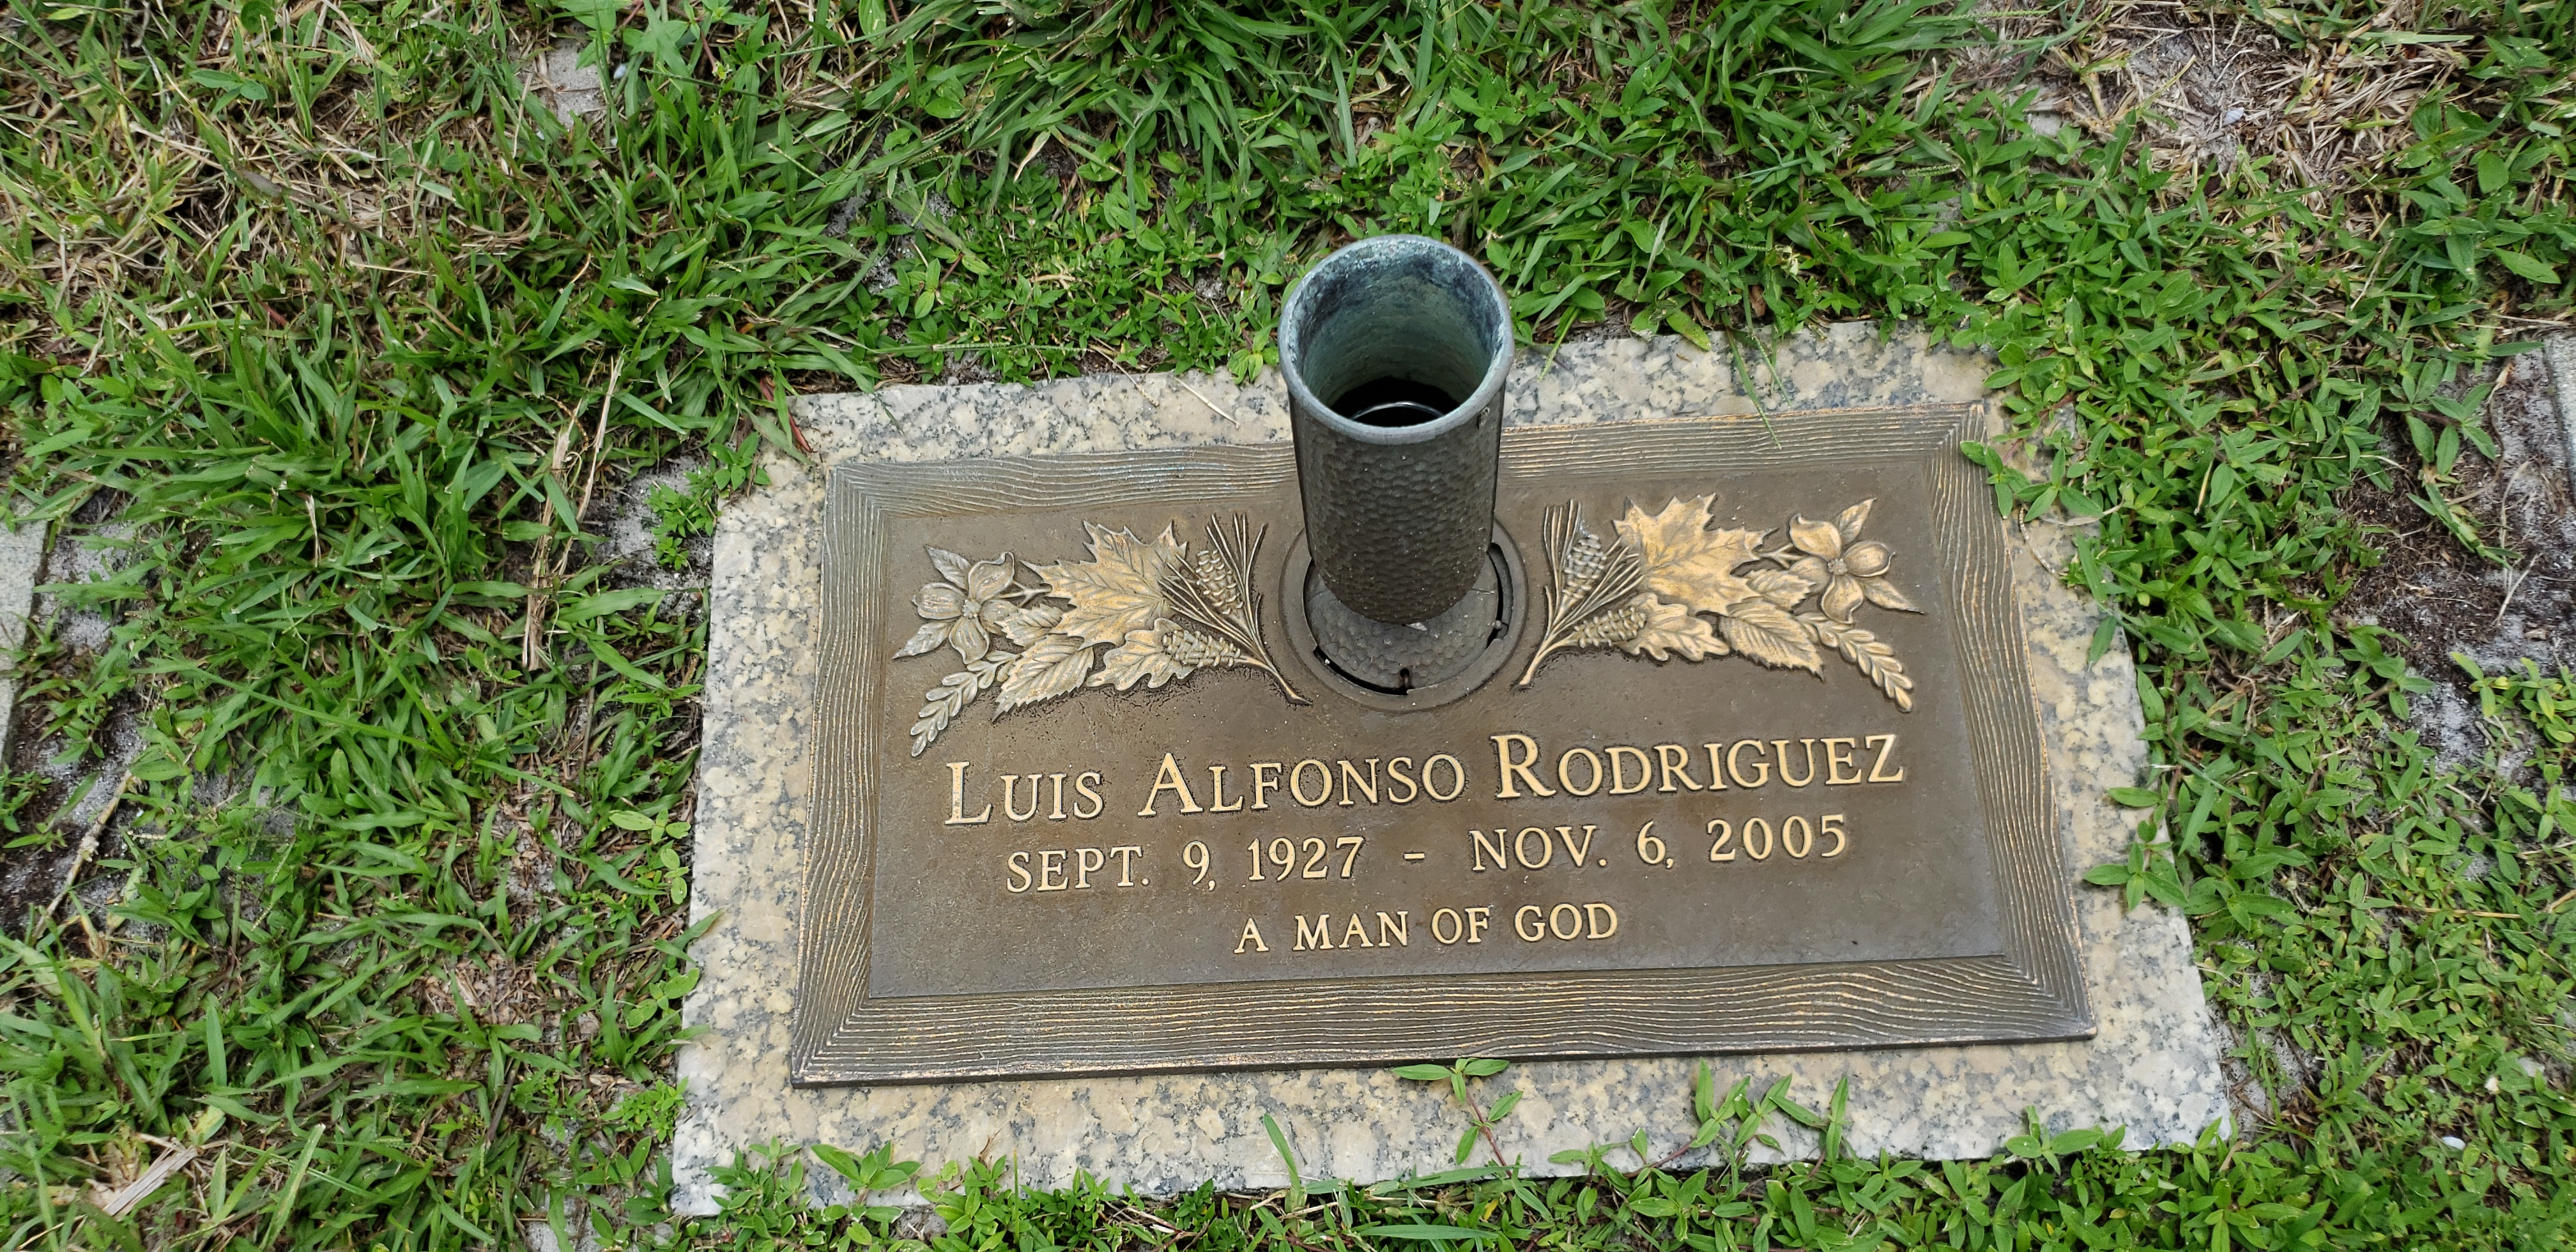 Luis Alfonso Rodriguez